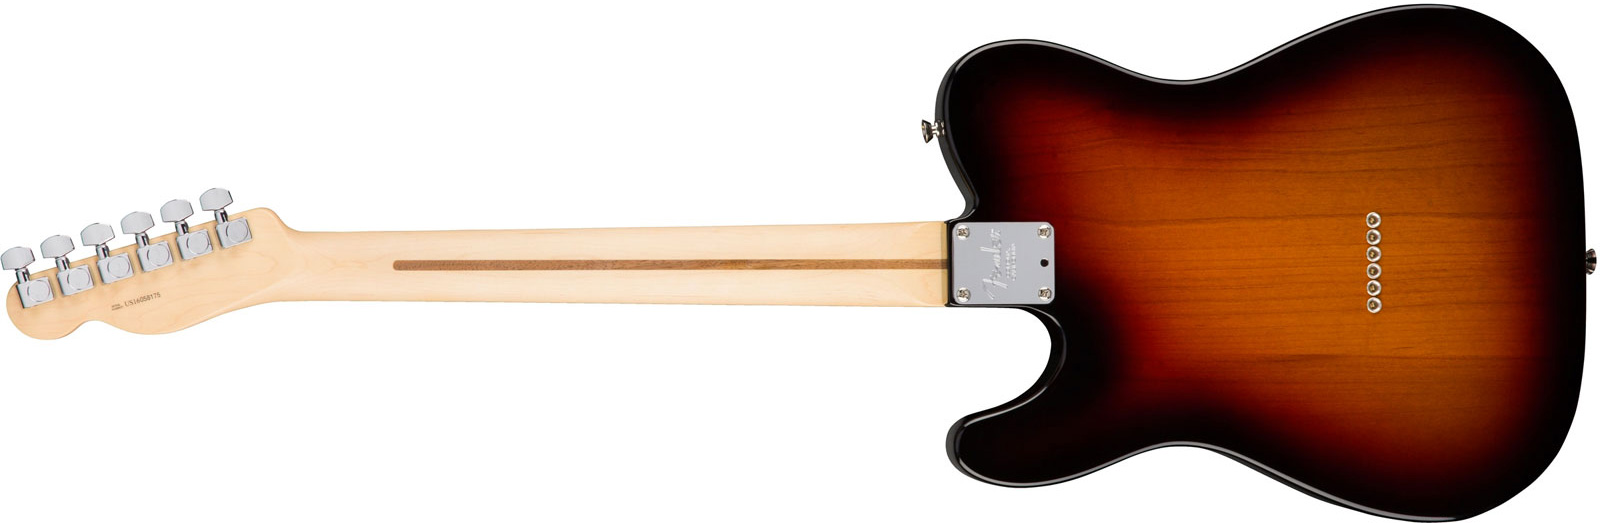 Fender Tele American Professional 2s Usa Mn - 3-color Sunburst - Televorm elektrische gitaar - Variation 2